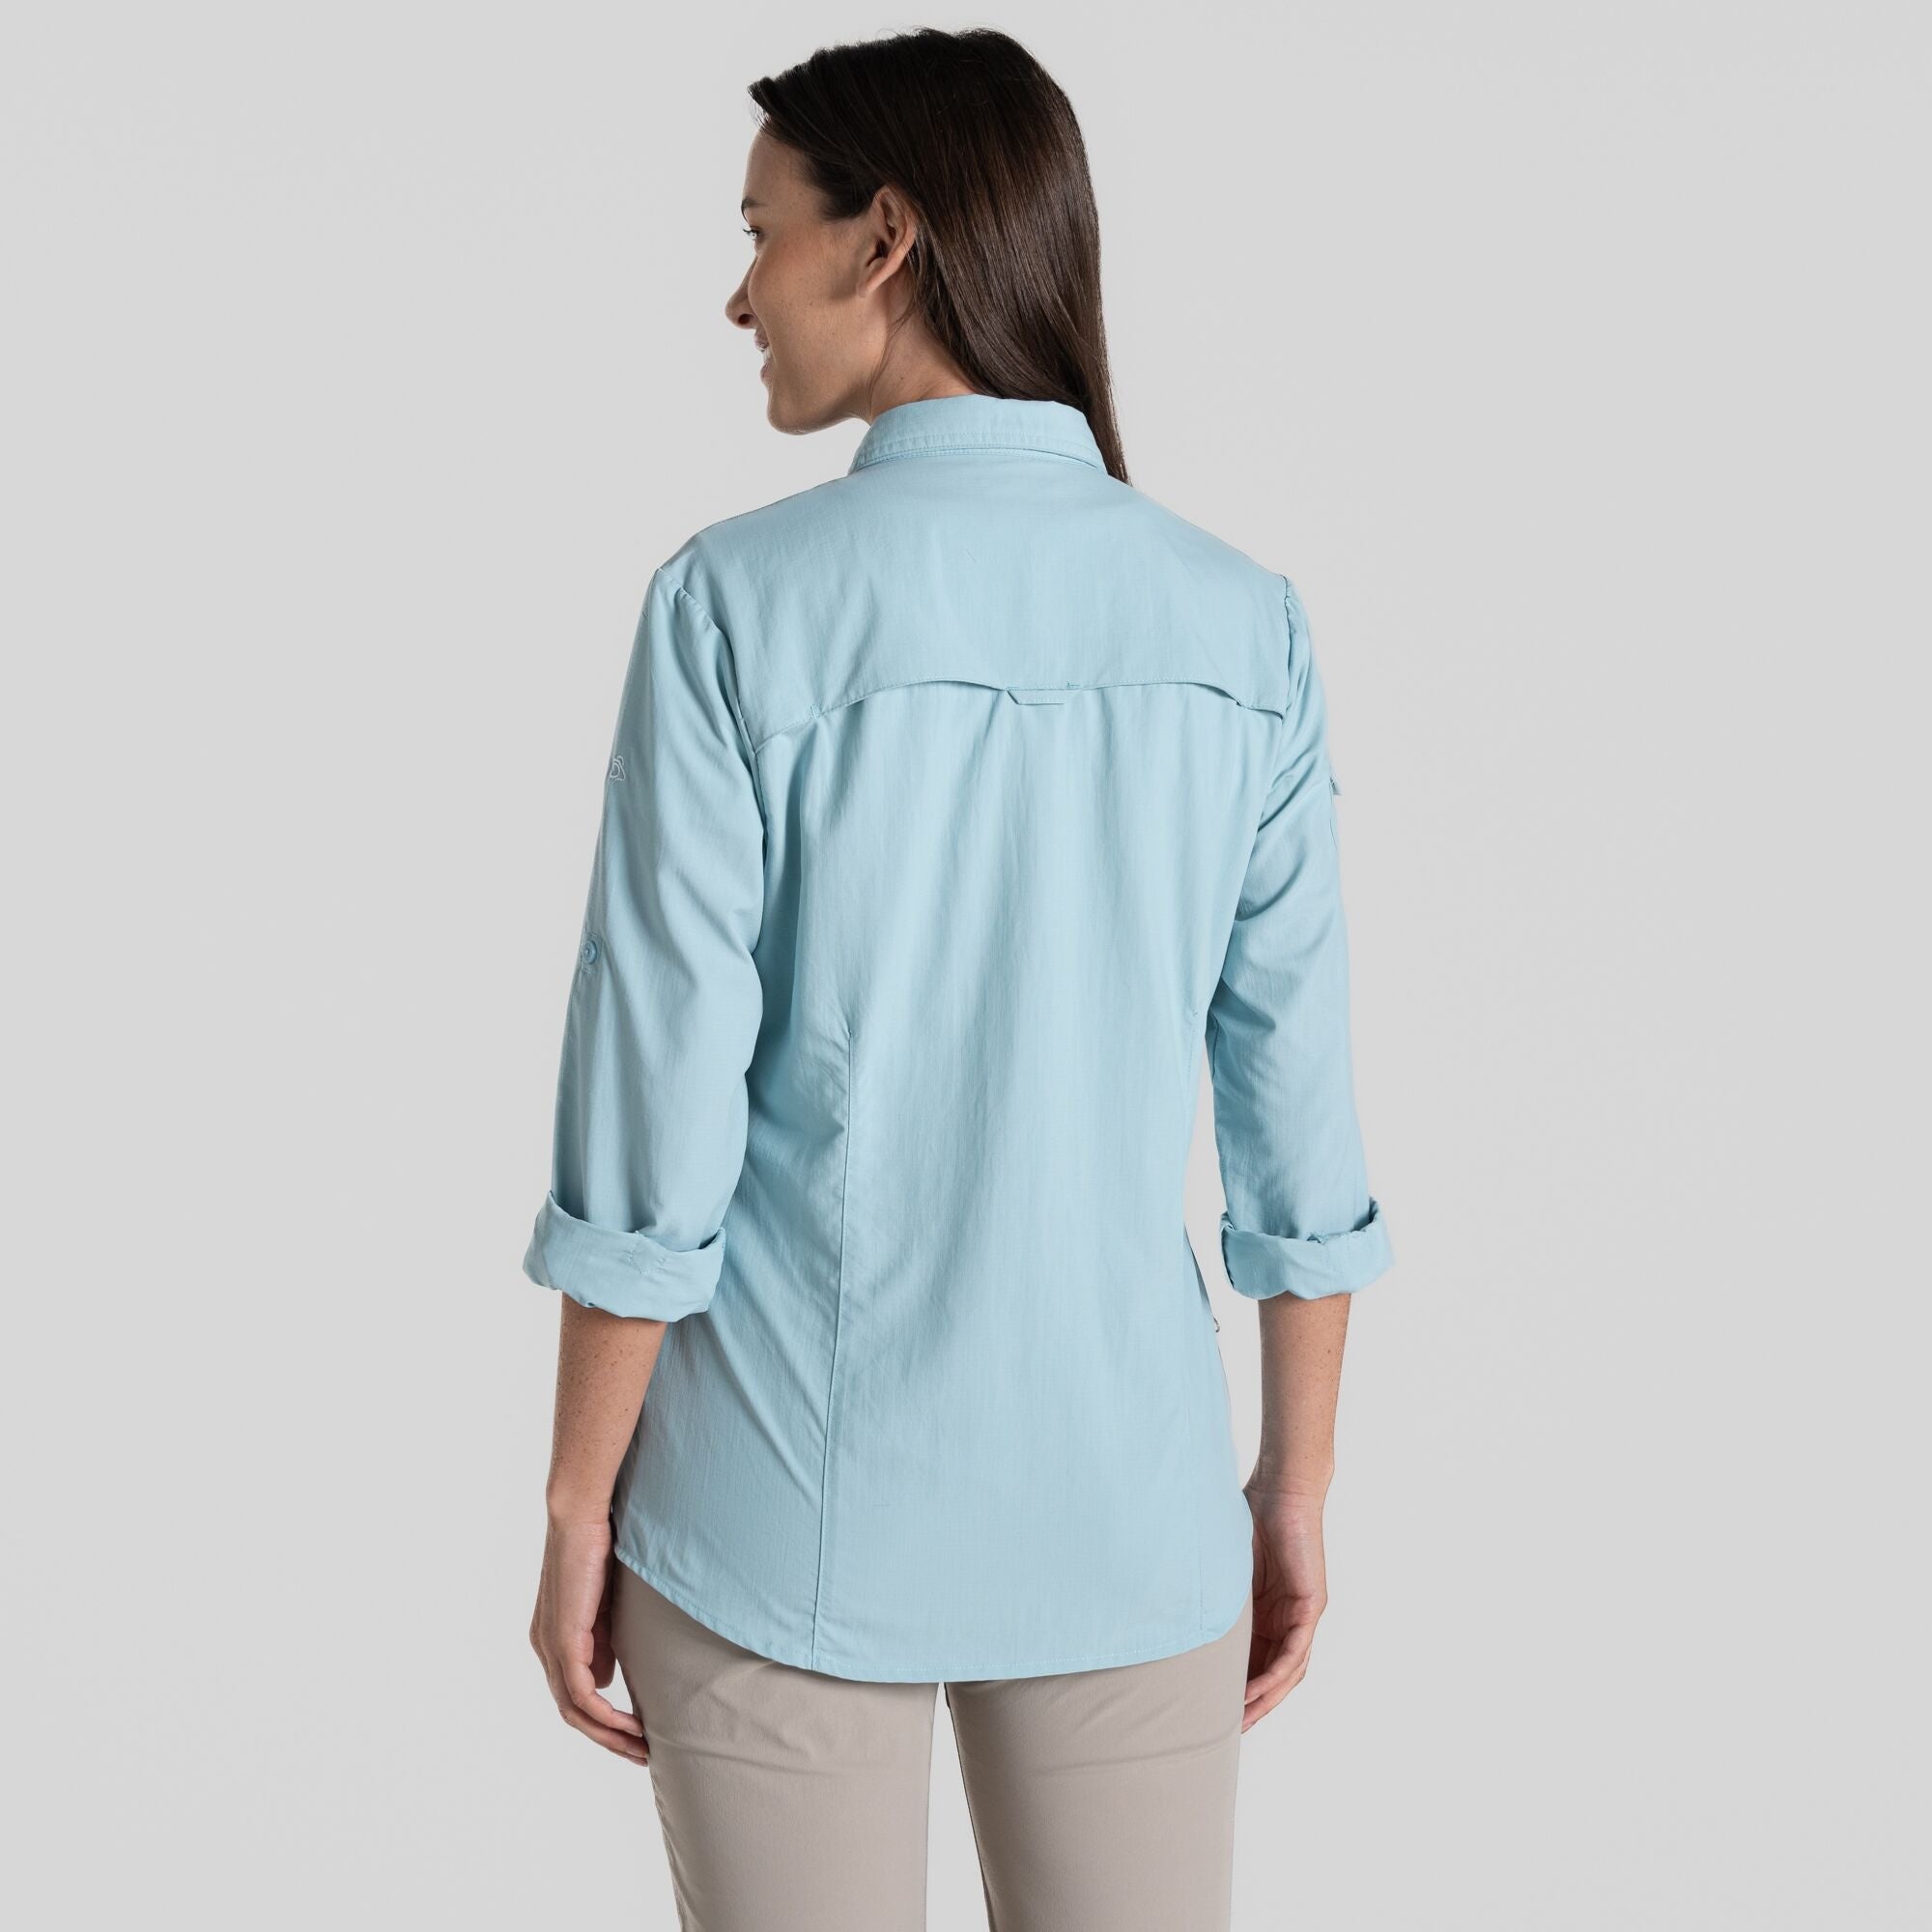 Women's Insect Shield® Adventure III Long-Sleeved Shirt | Sky Blue